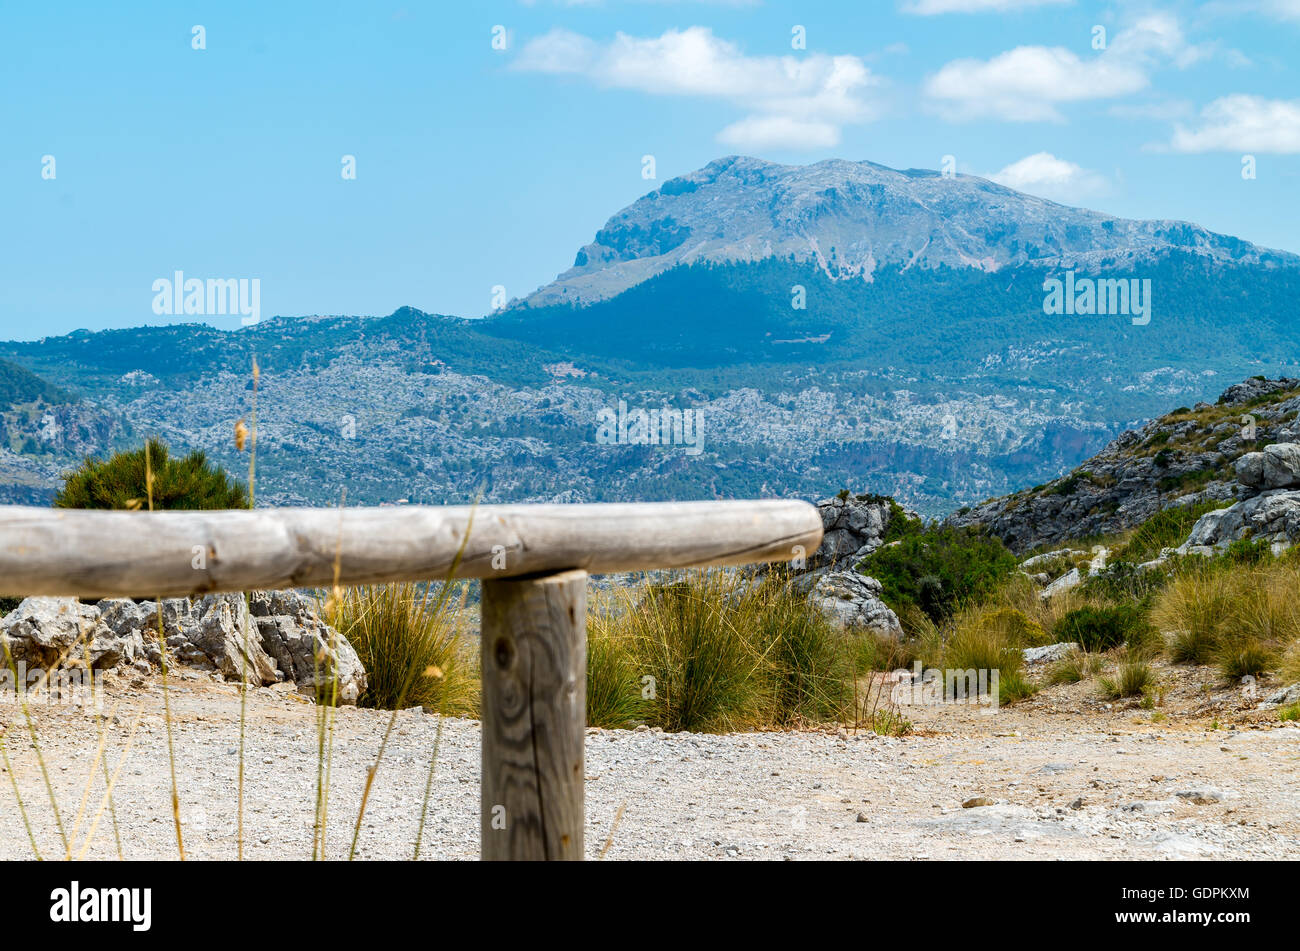 Sa Calobra in Serra de Tramuntana - mountains in Mallorca, Spain Stock Photo